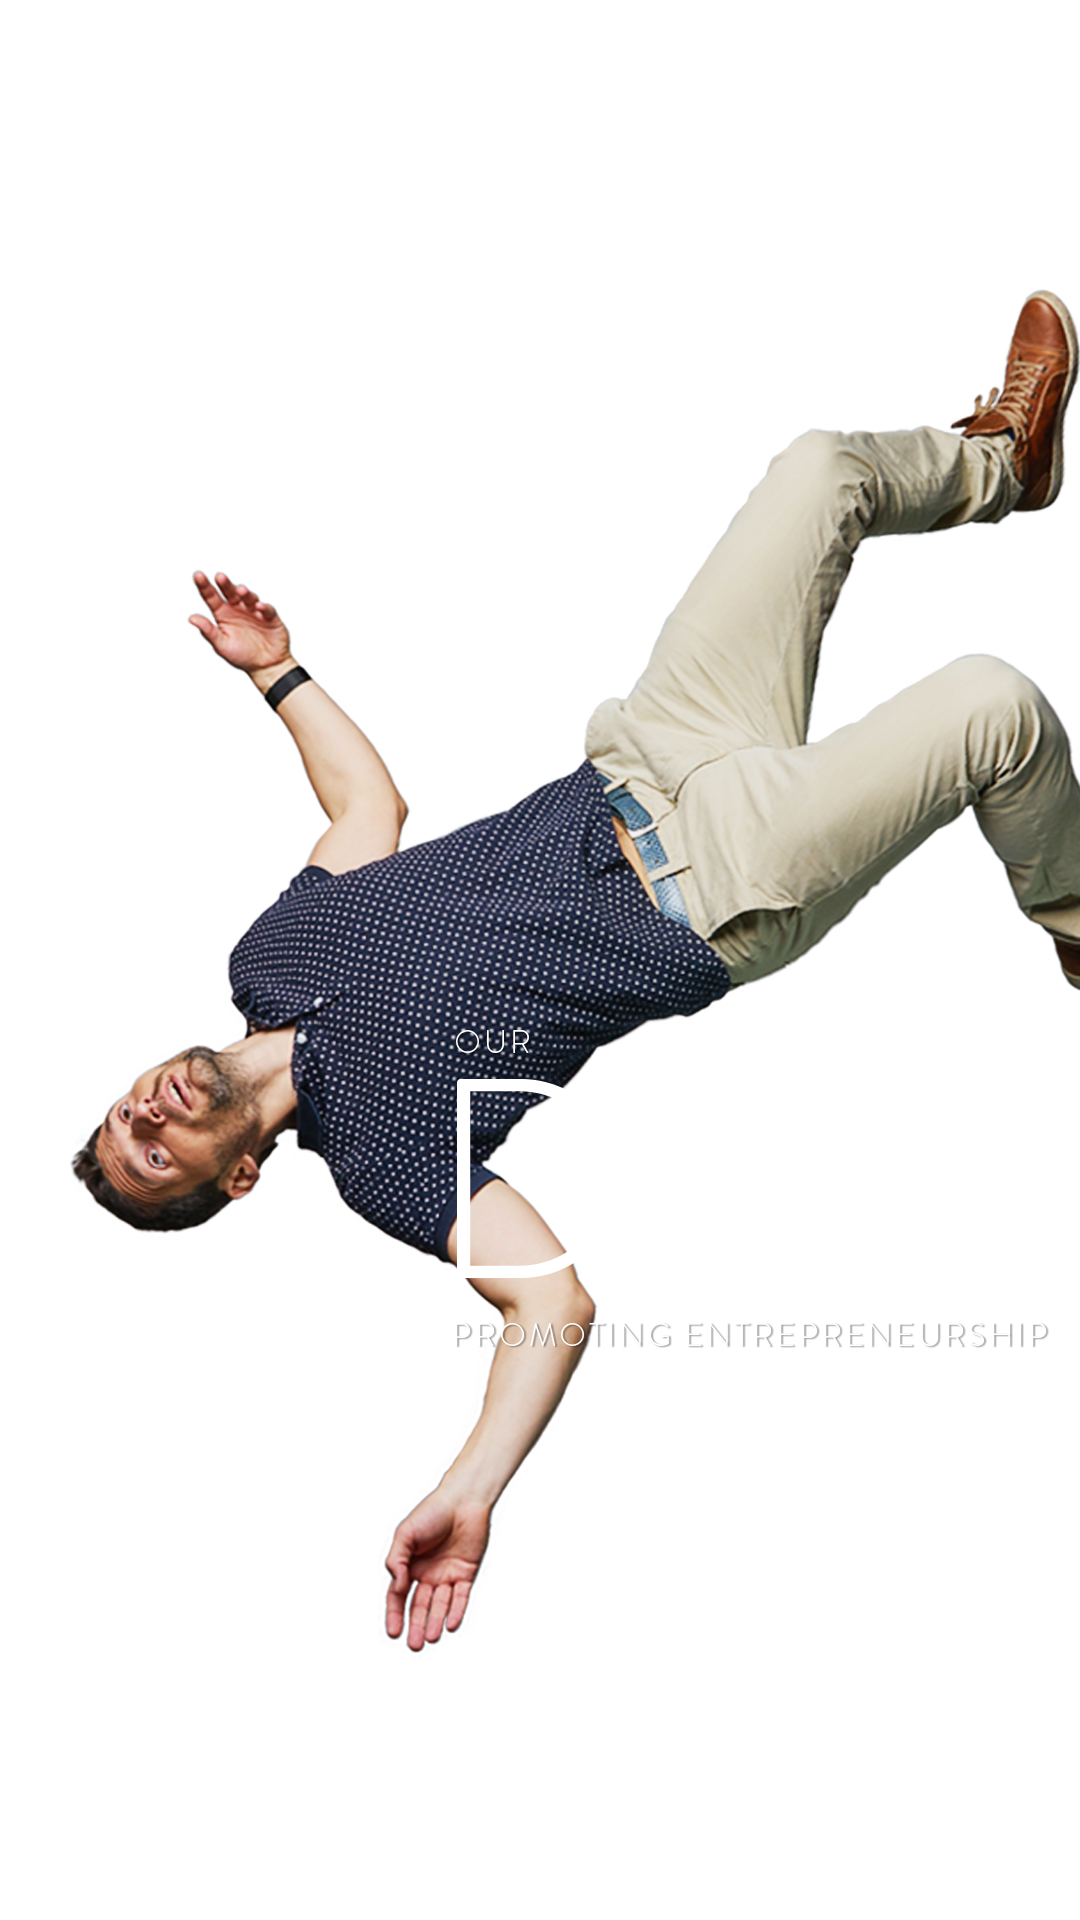 Our DNA: promoting entrepreneurship